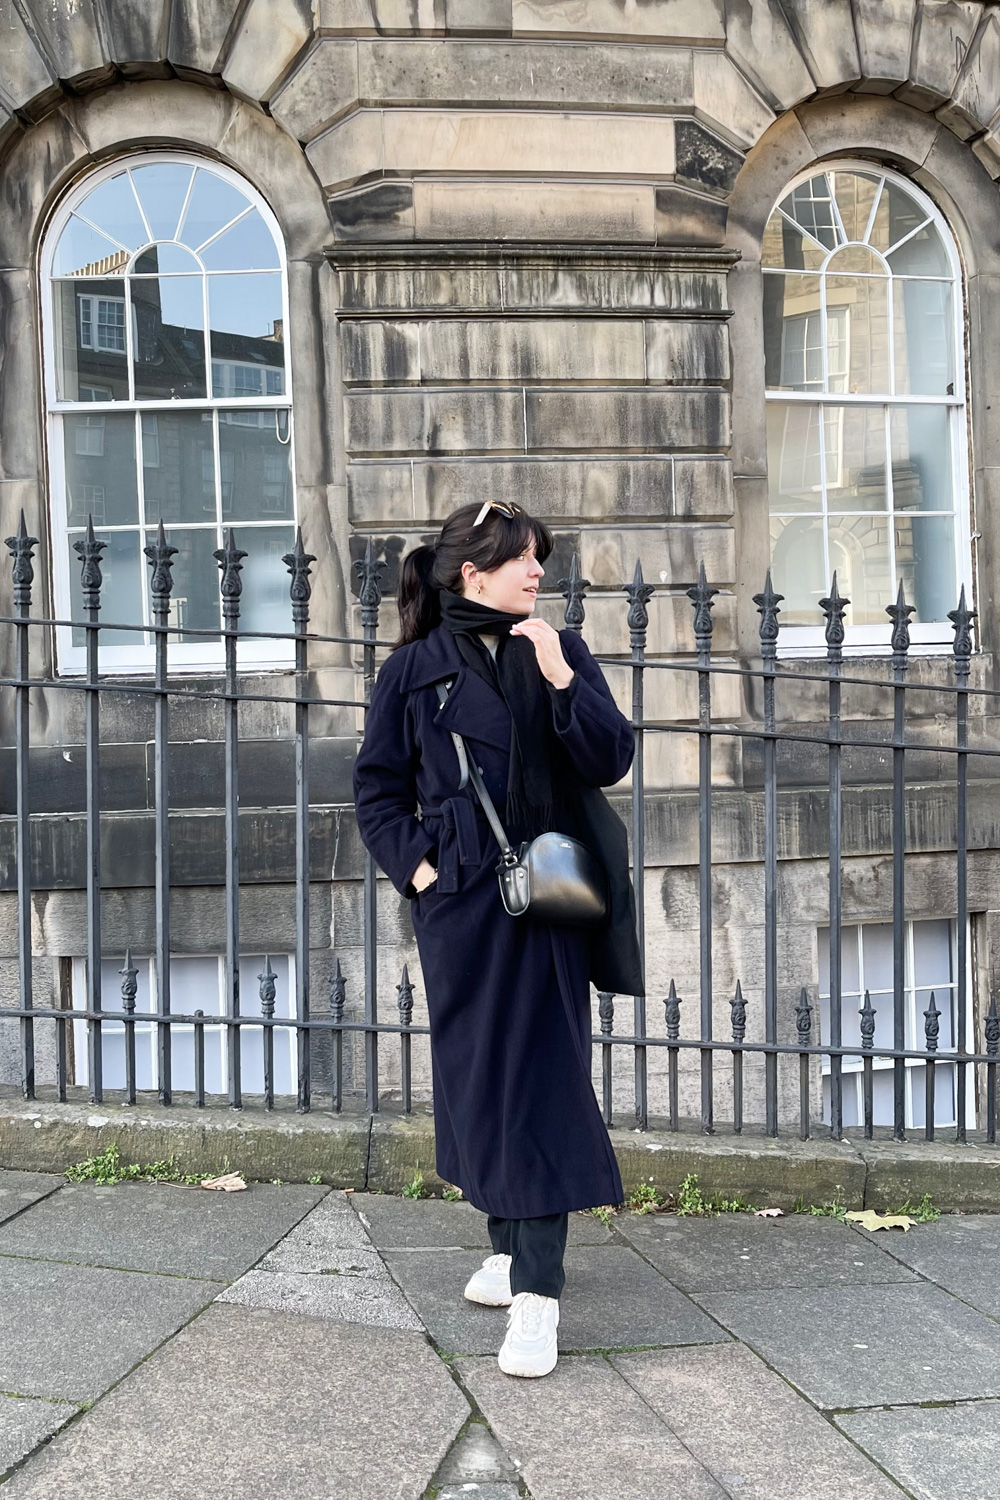 Besma standing in winter coat in Edinburgh